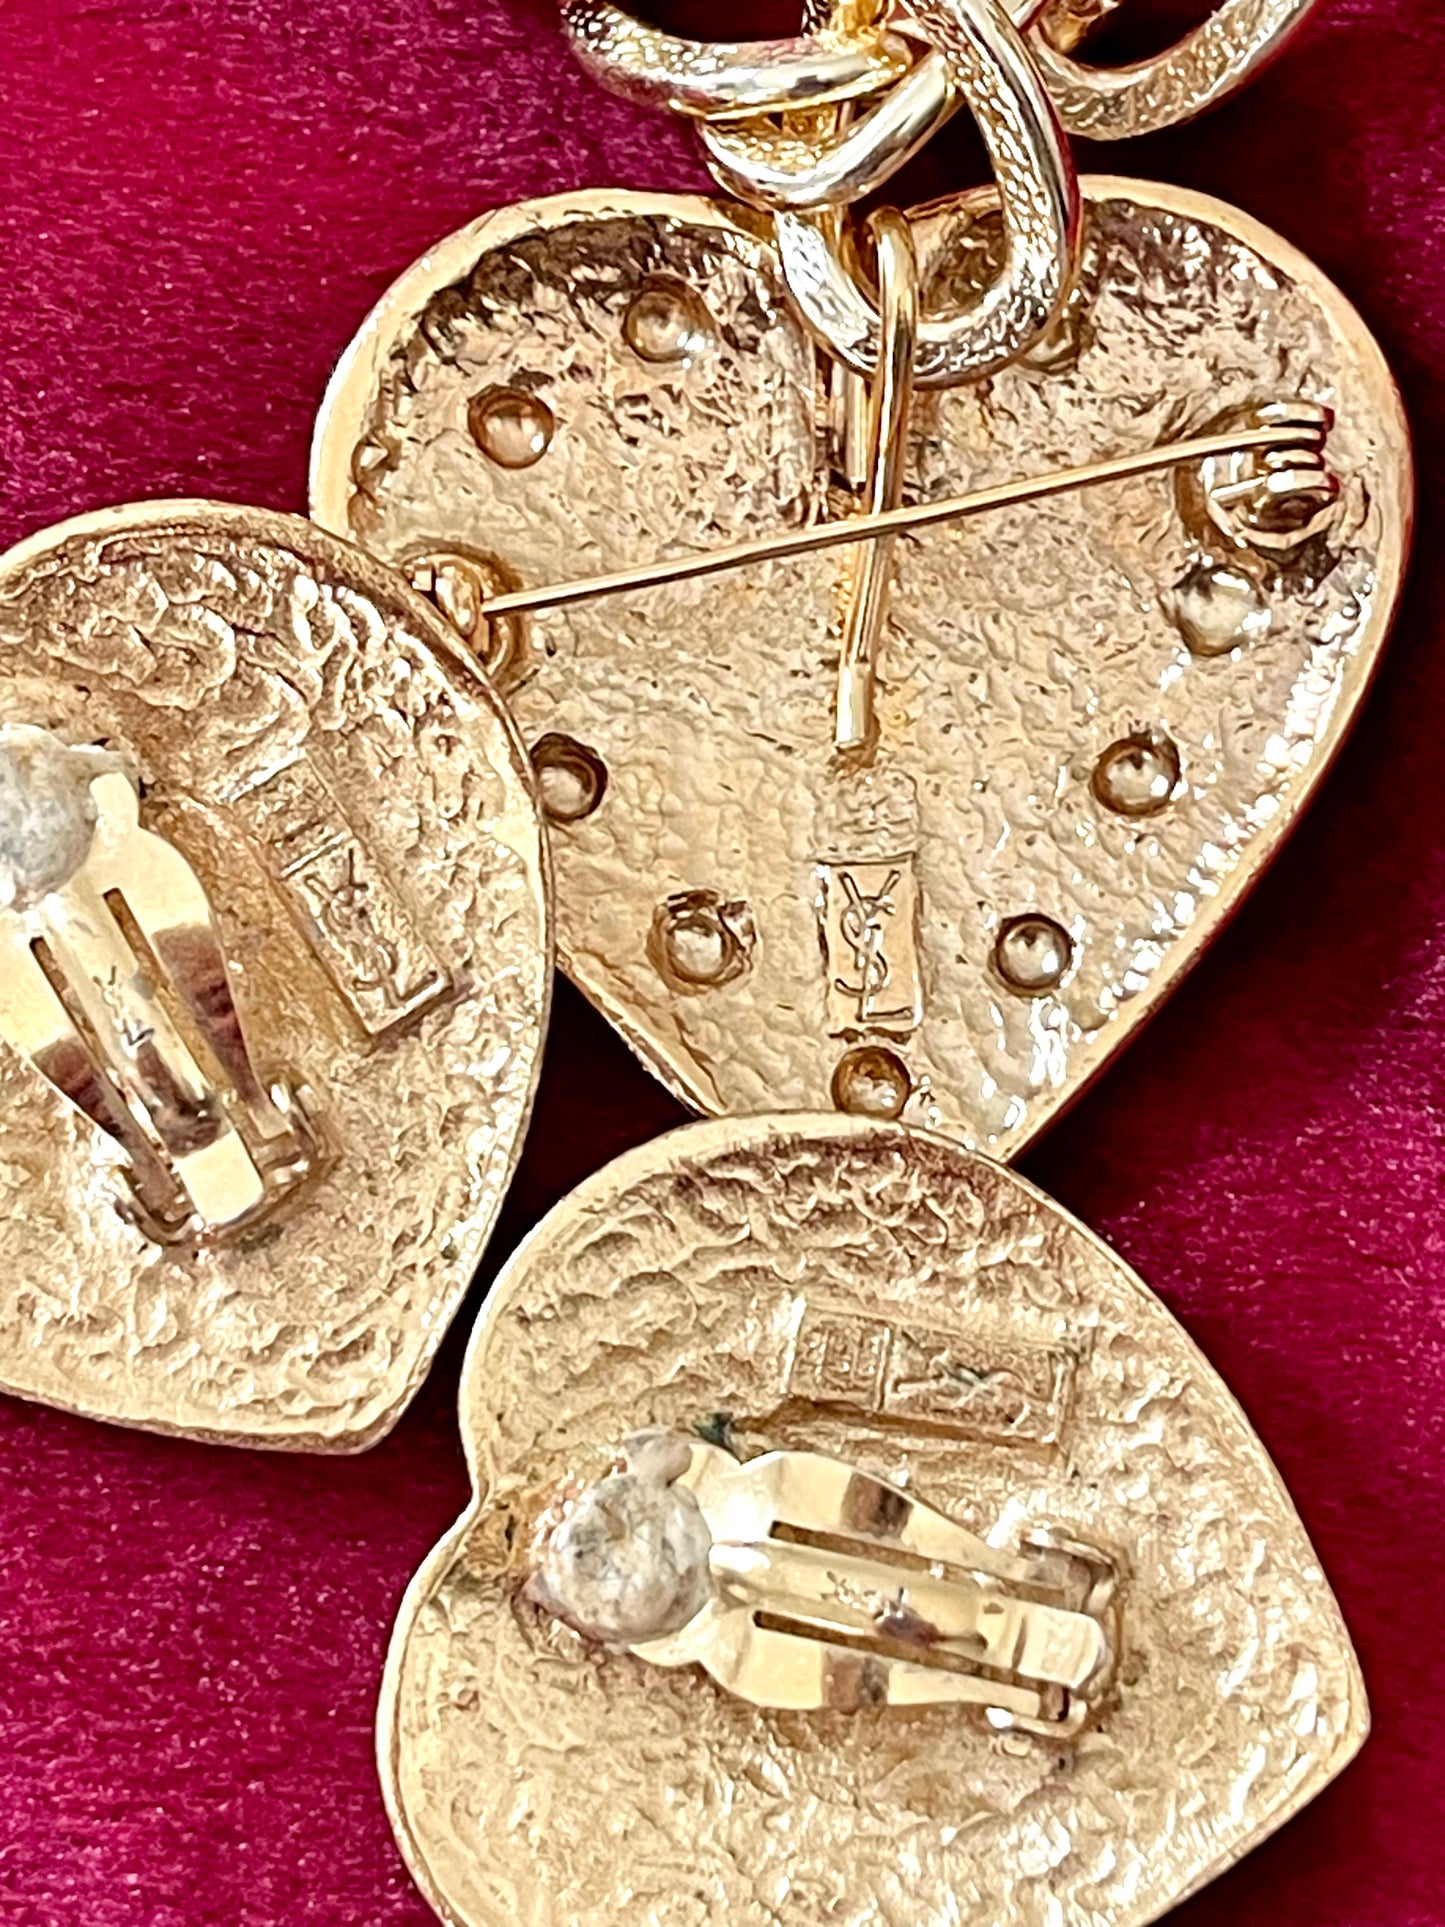 Gold Heart Metal Earrings & Pendant Brooch. Yves Saint Laurent Vintage Authentic Rare Set